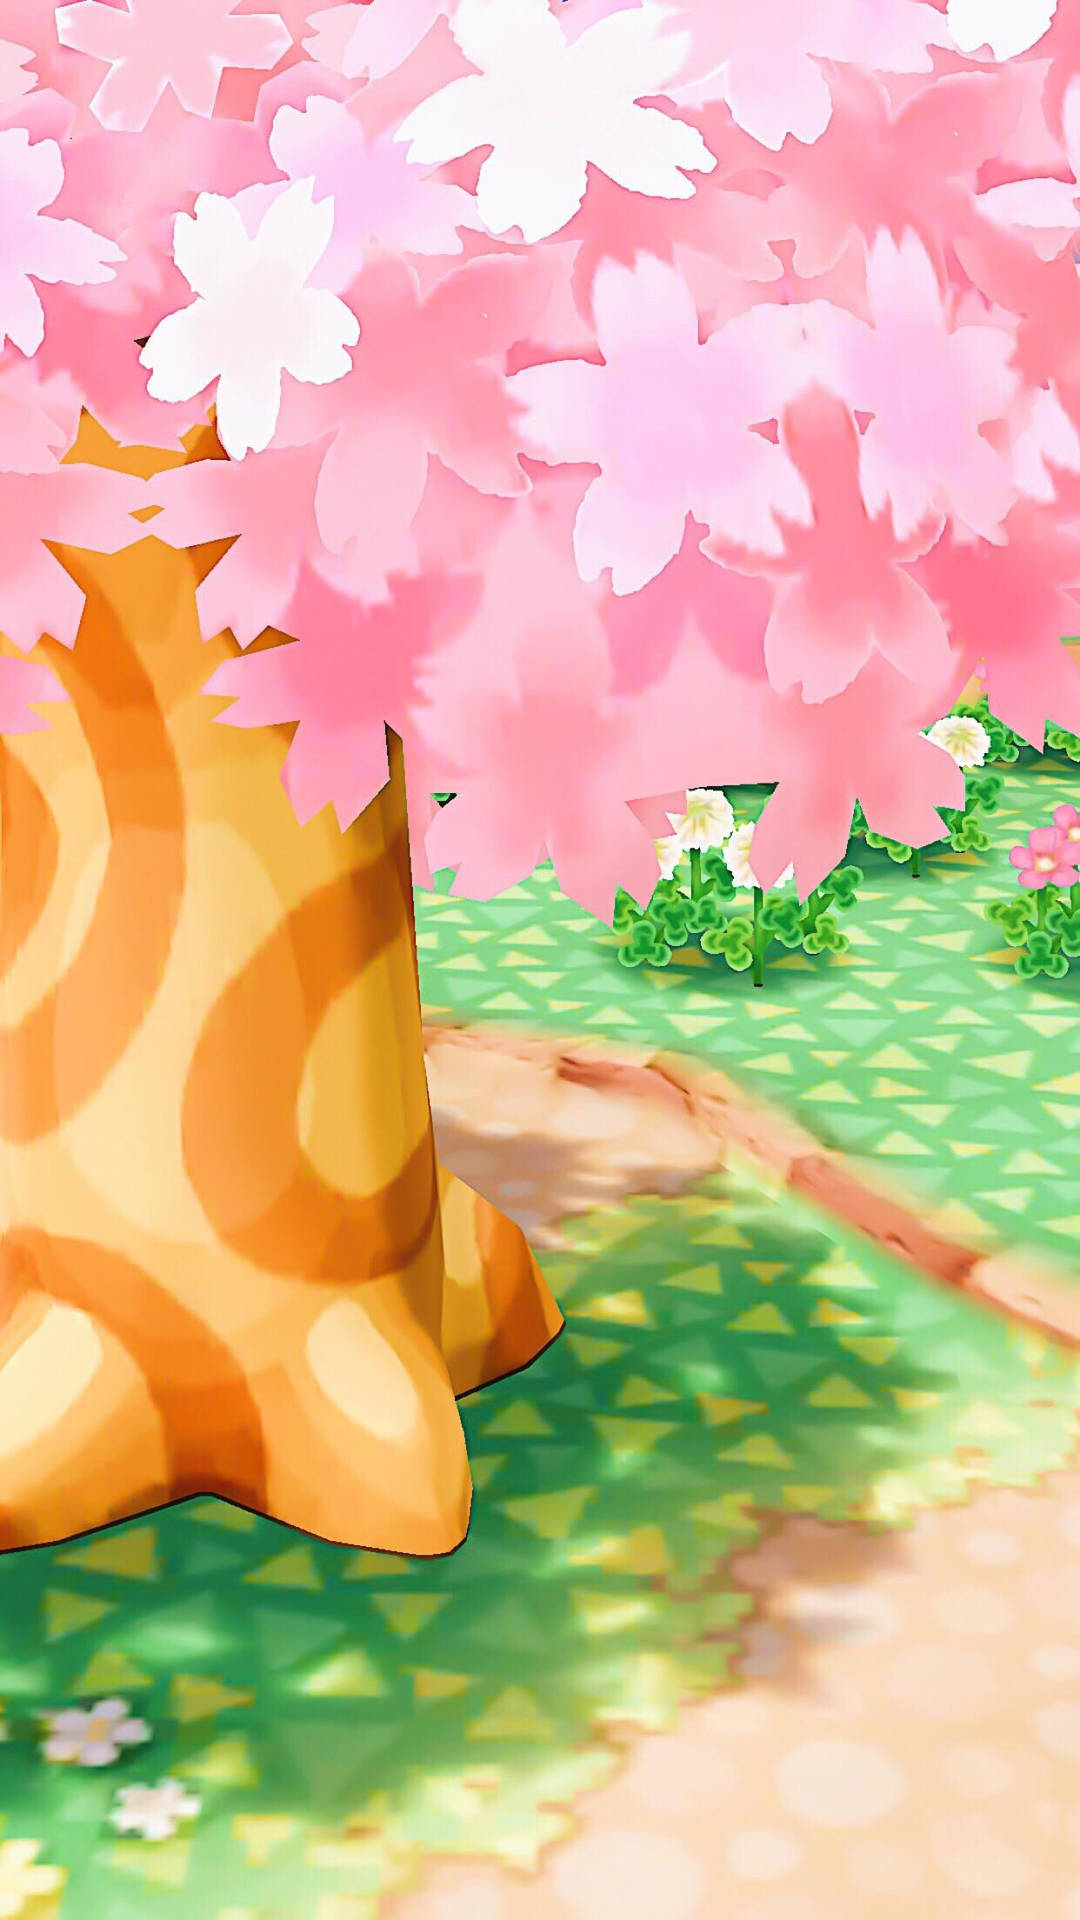 Hd Animal Crossing Pink Tree